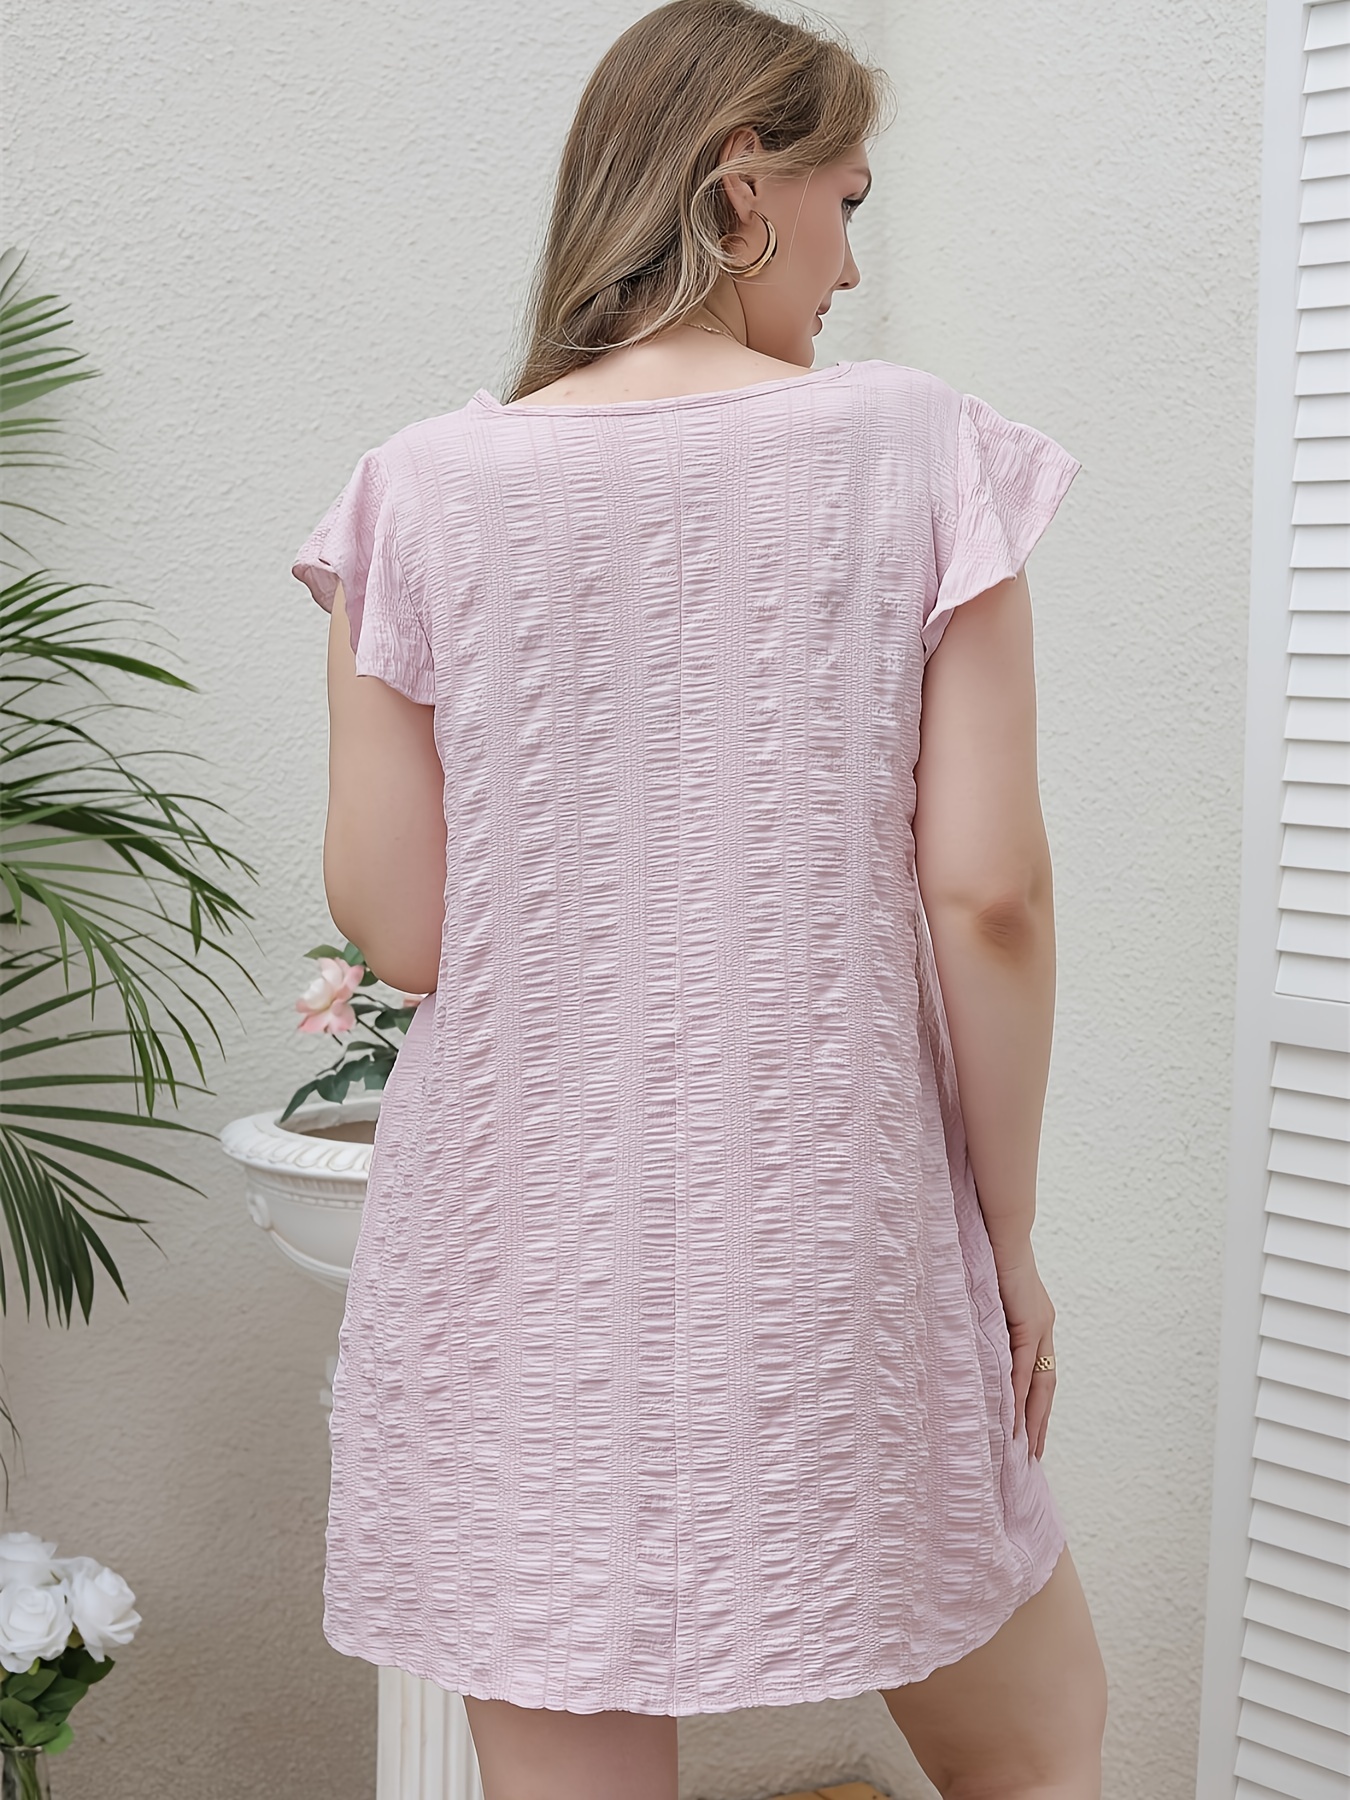 Womens Plus Size Blush Pink Jaquard Lace Gown 2XL Maxi Dress